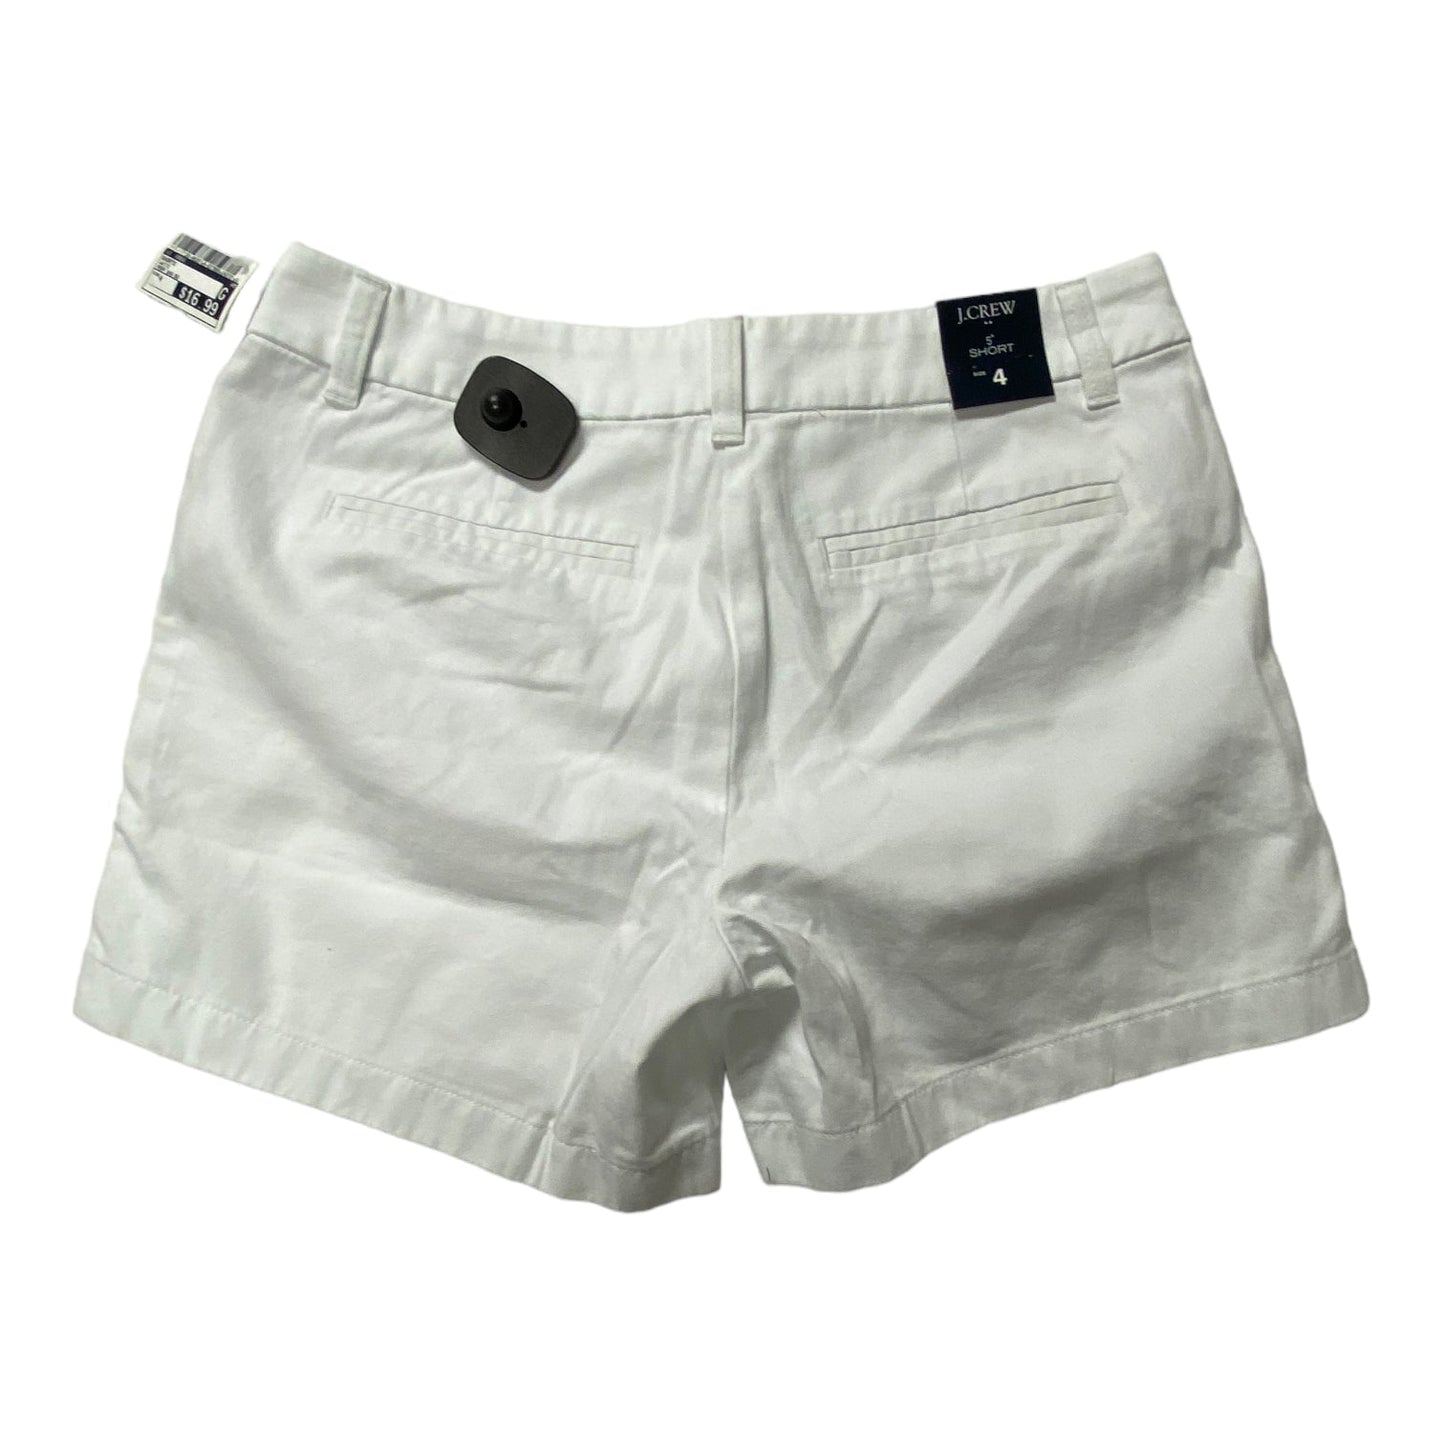 White Shorts J. Crew, Size 4